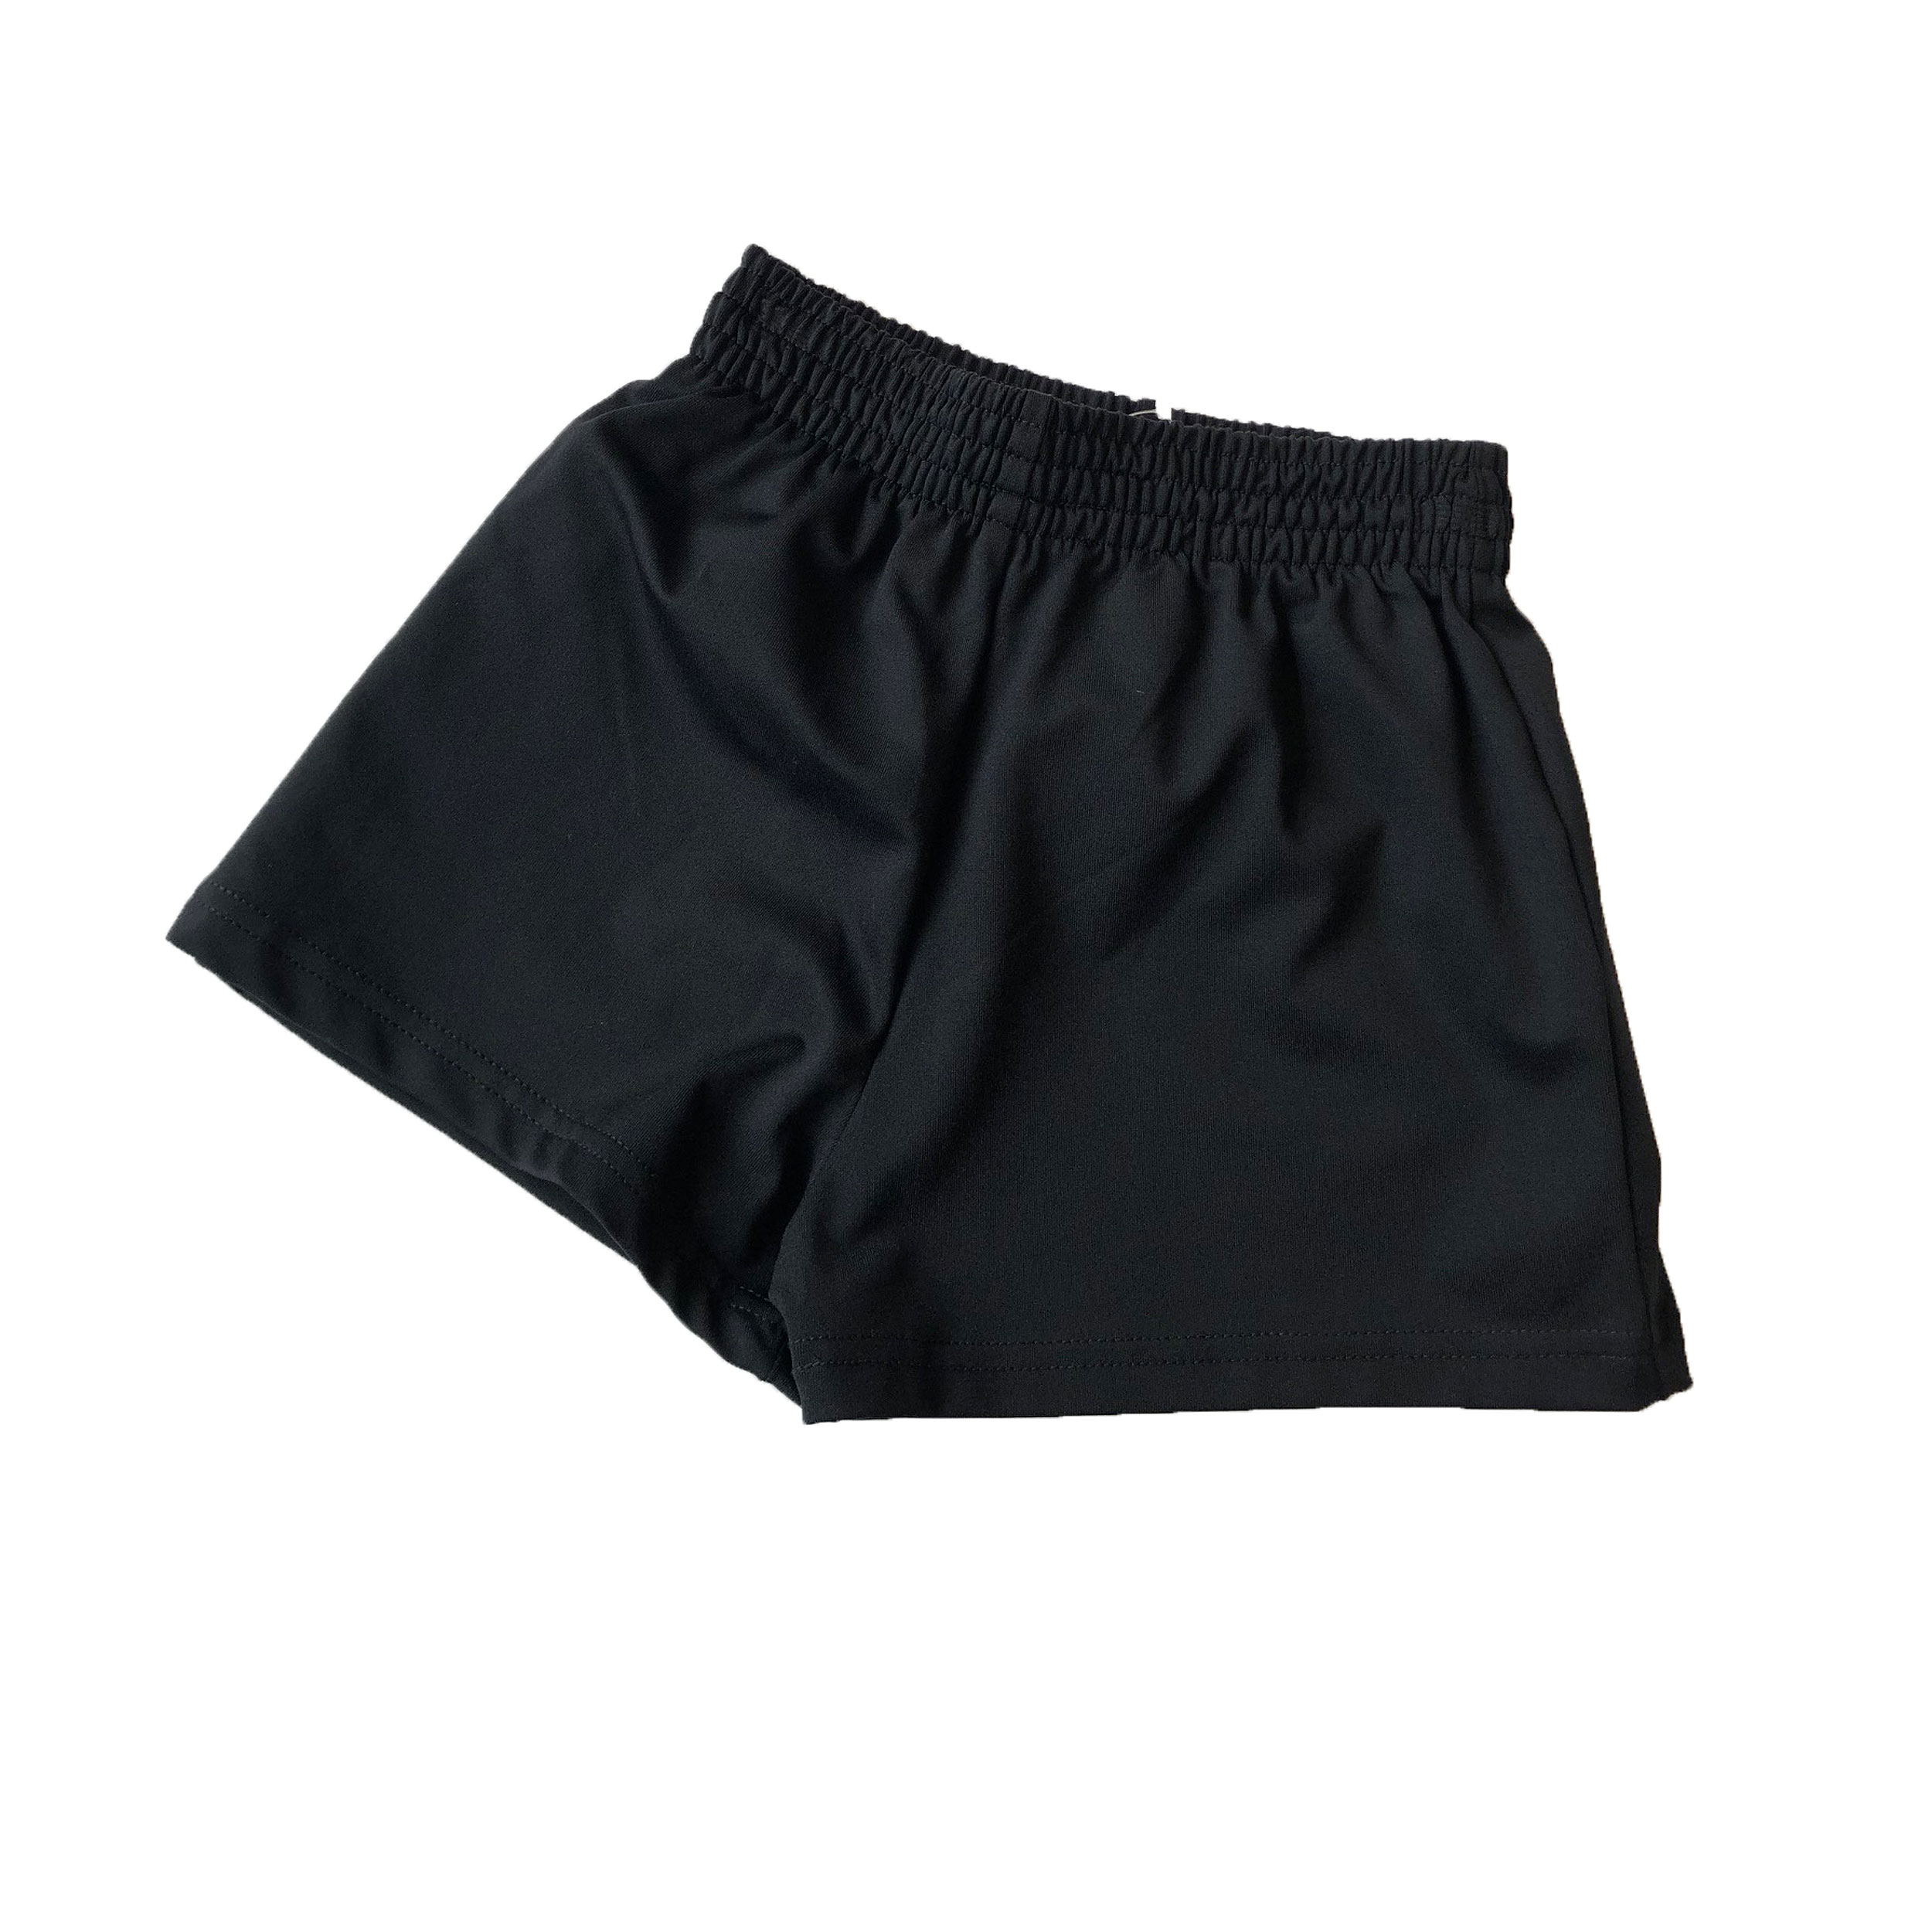 https://palmersschoolwear.co.uk/wp-content/uploads/dorridge-boys-p-e-shorts-david-luke-navy-shop.jpg